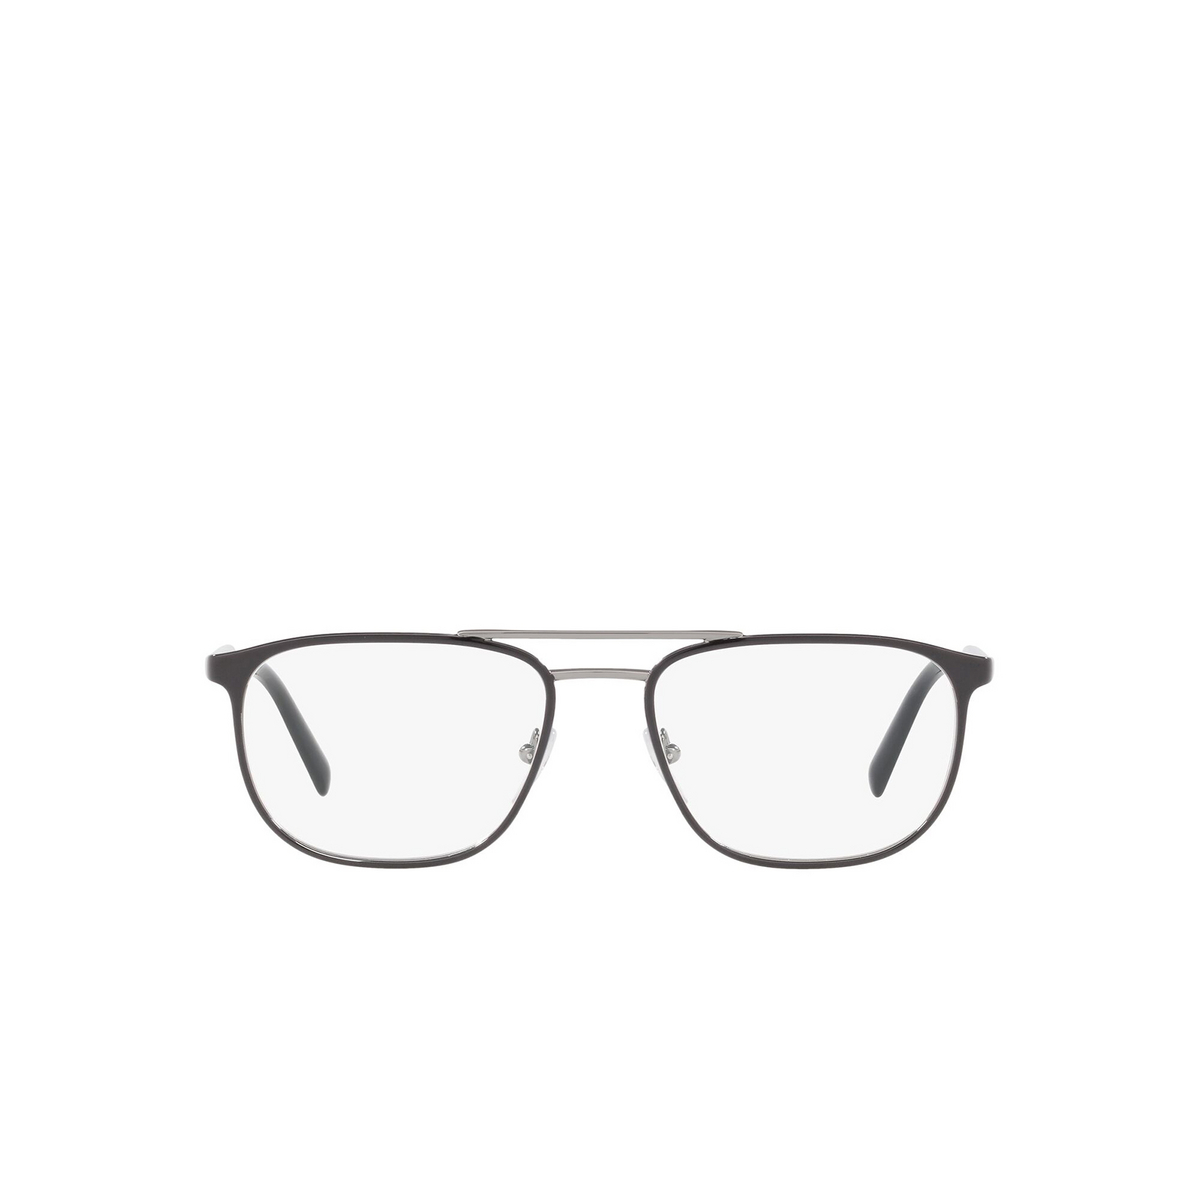 Prada® Square Eyeglasses: Conceptual PR 54XV color Top Black On Gunmetal YDC1O1 - front view.